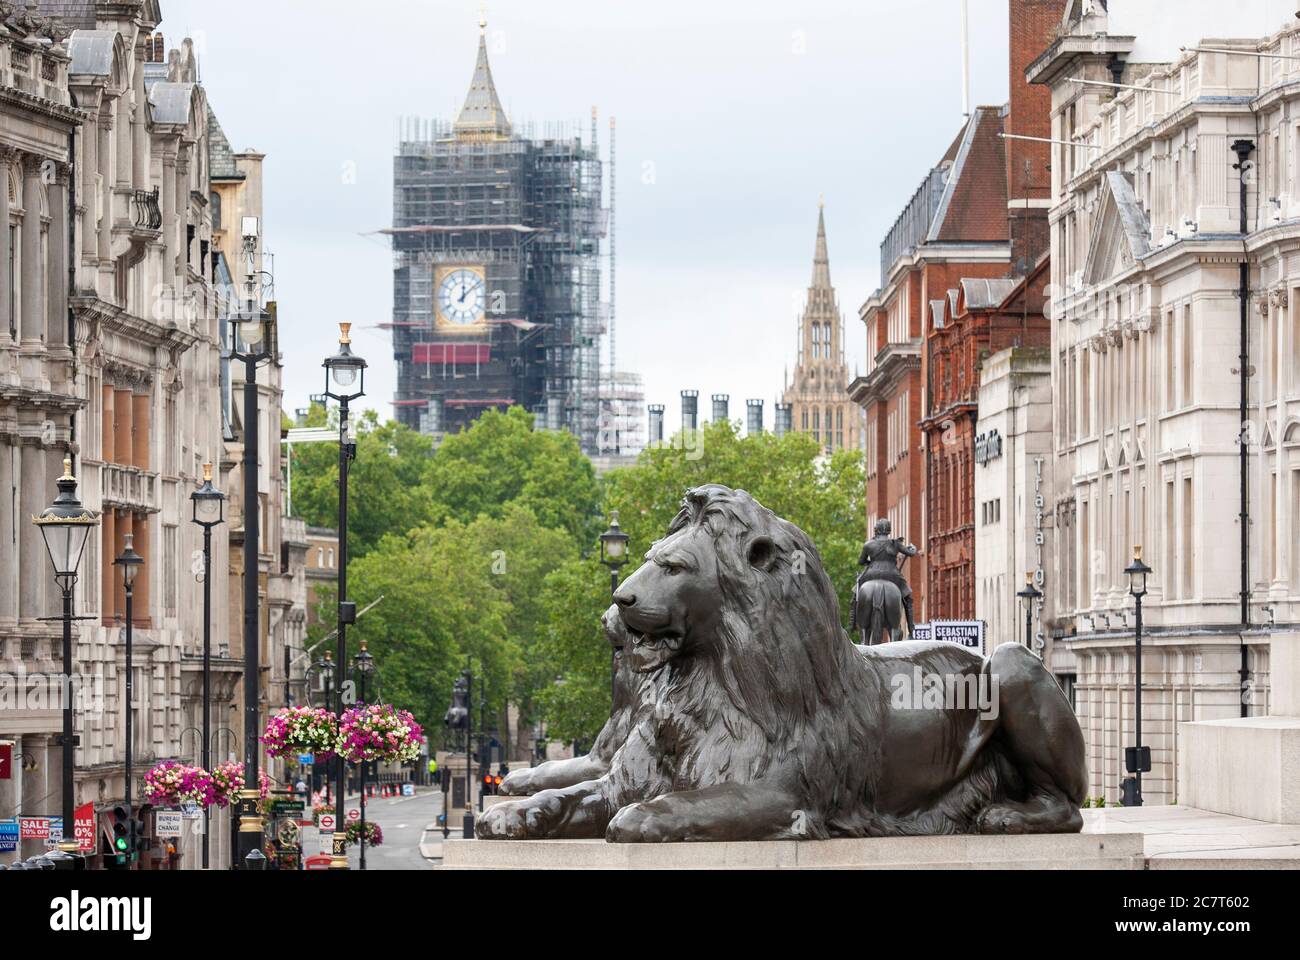 Landseer lion in Trafalgar Square with Big Ben clock in the background. London UK Stock Photo